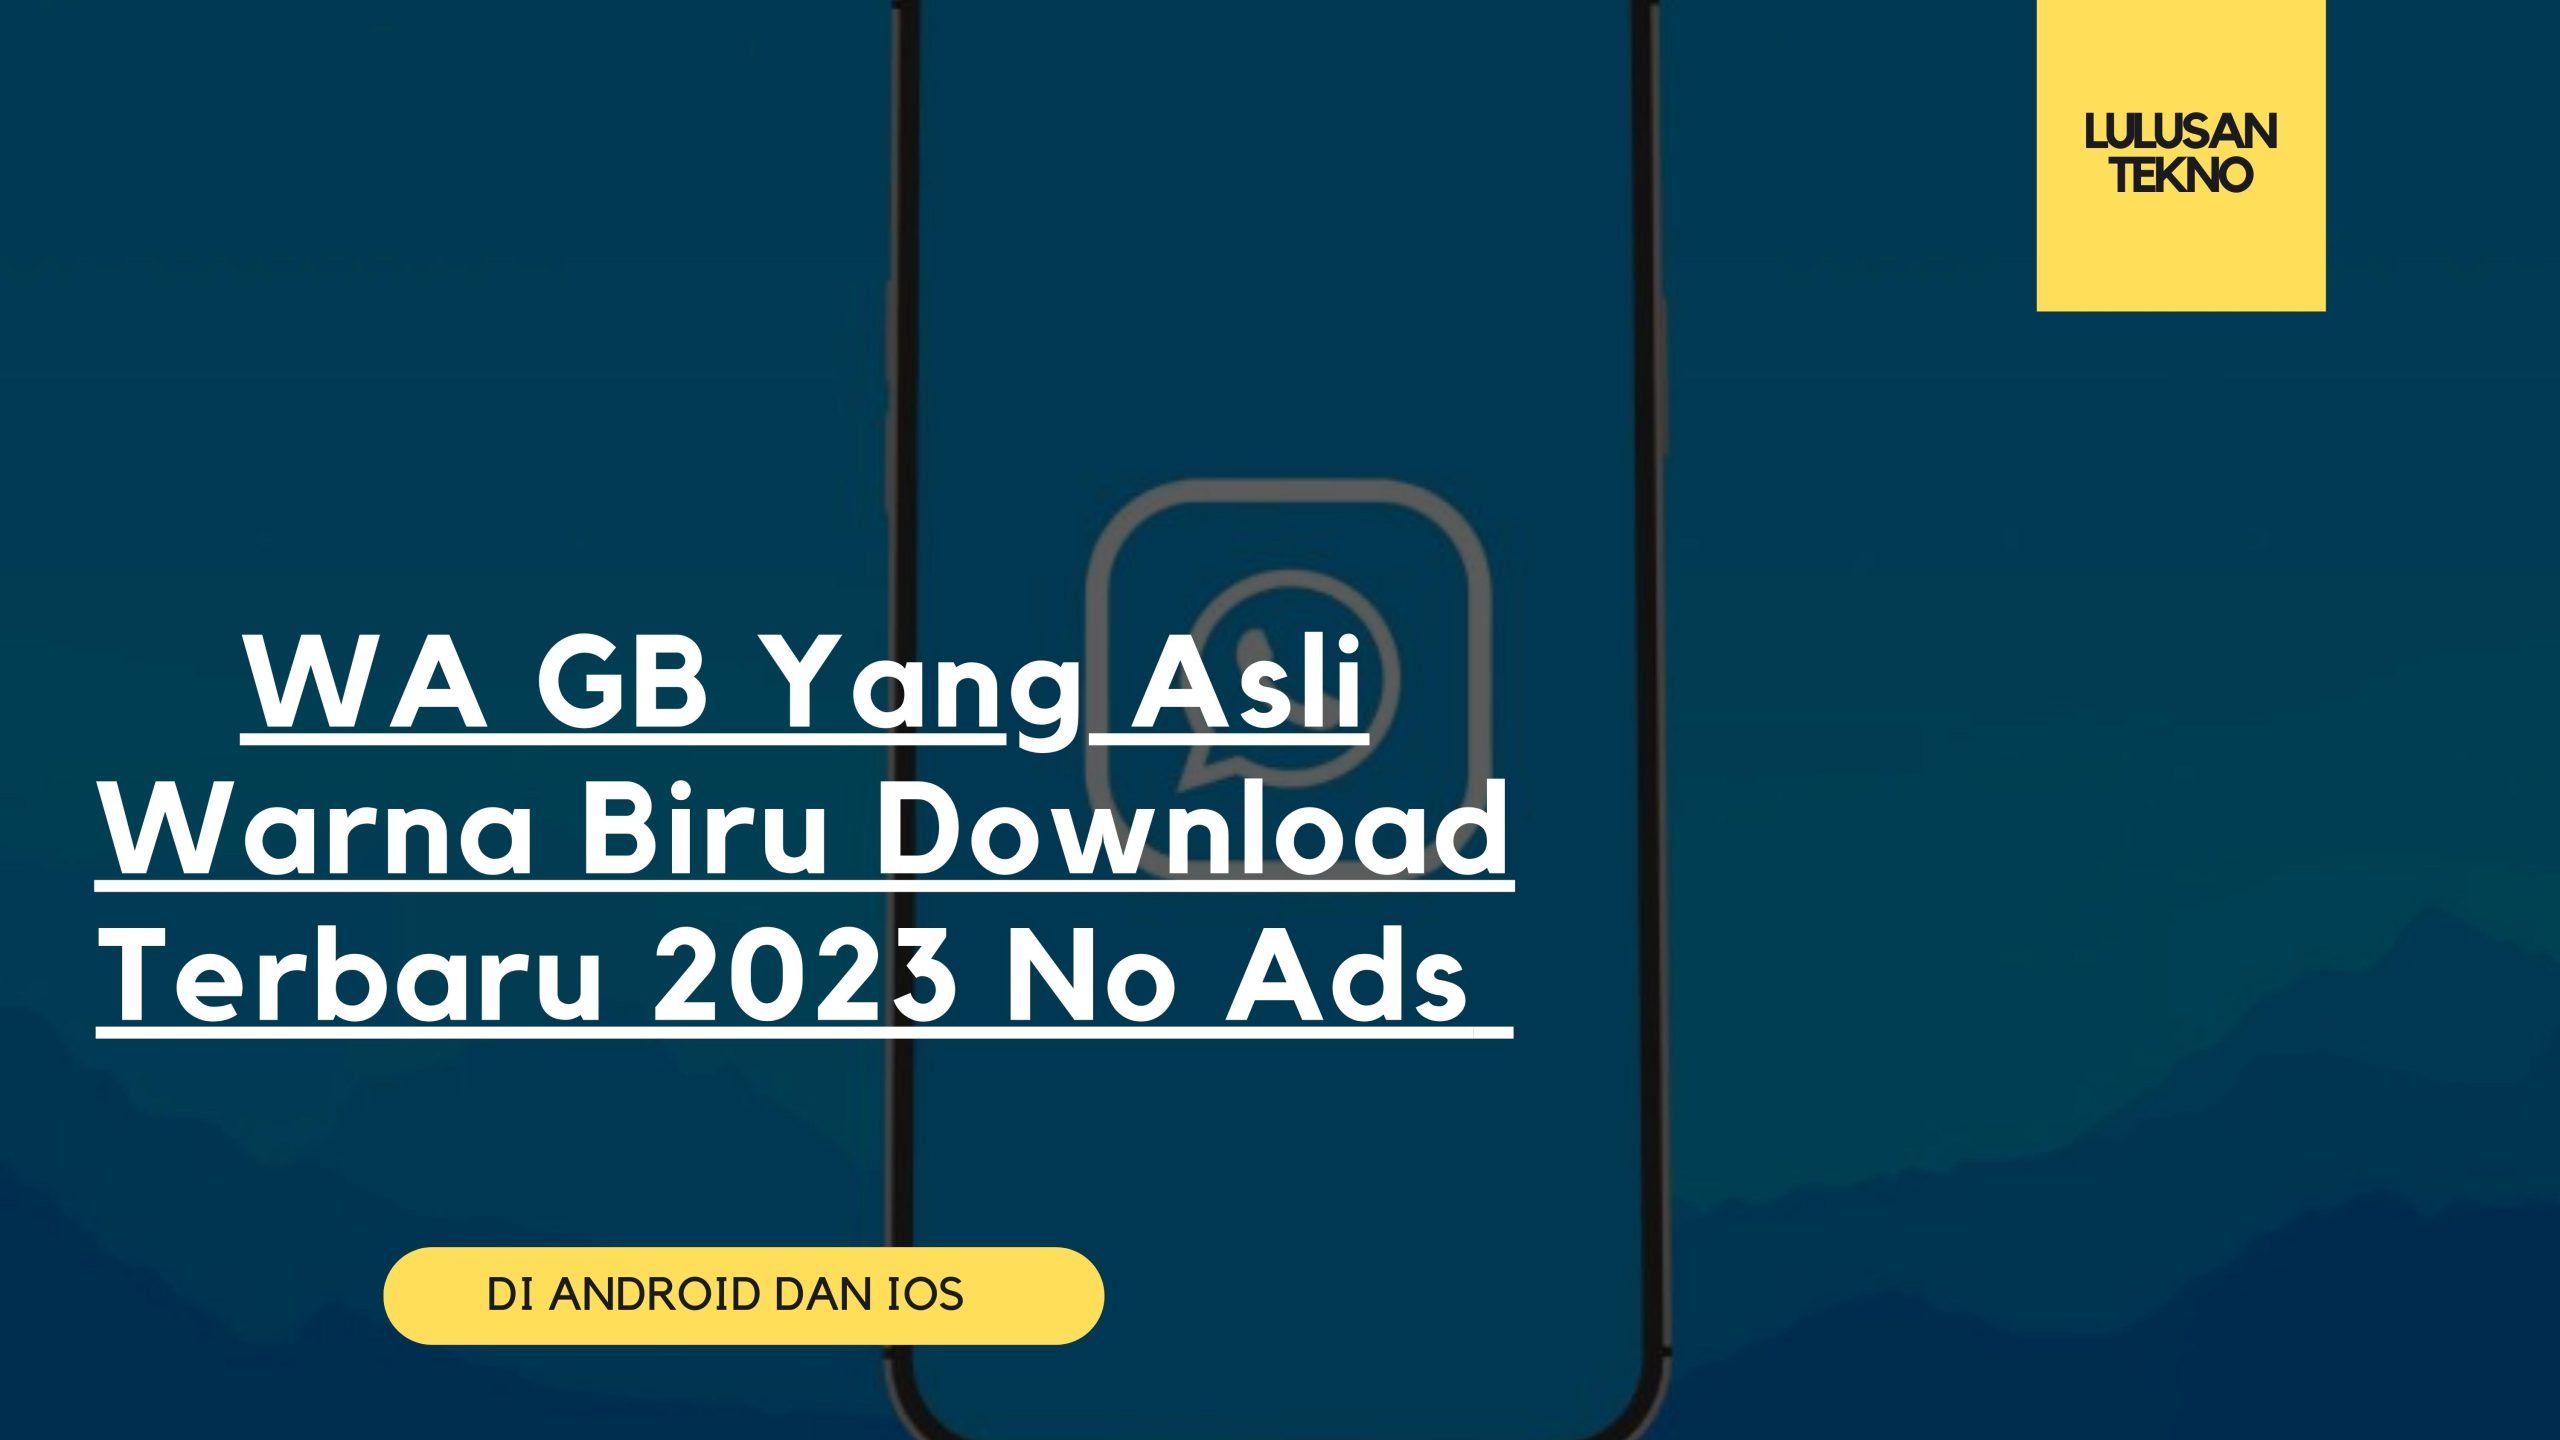 WA GB Yang Asli Warna Biru Download Terbaru 2023 No Ads